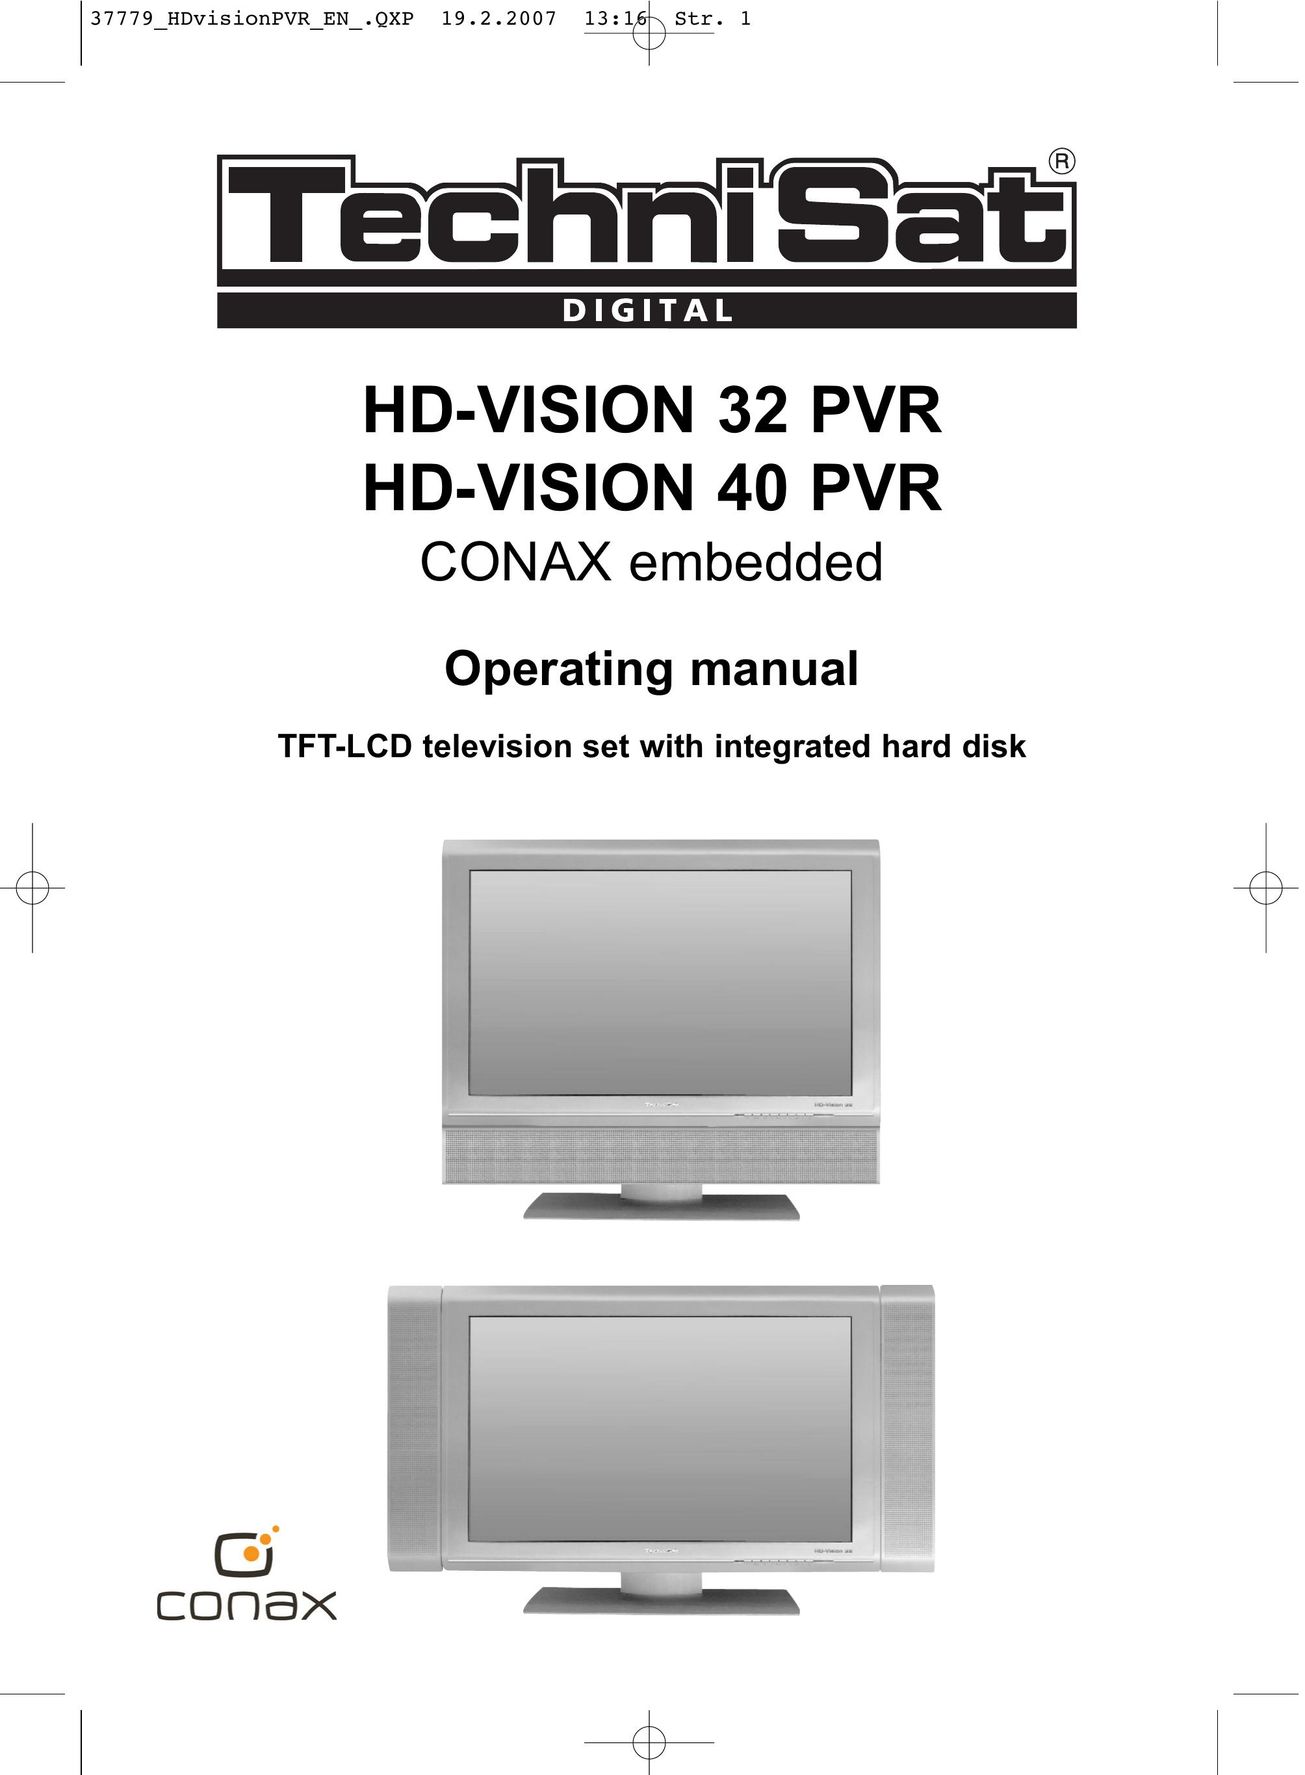 TechniSat HD-VISION 40 PVR Flat Panel Television User Manual